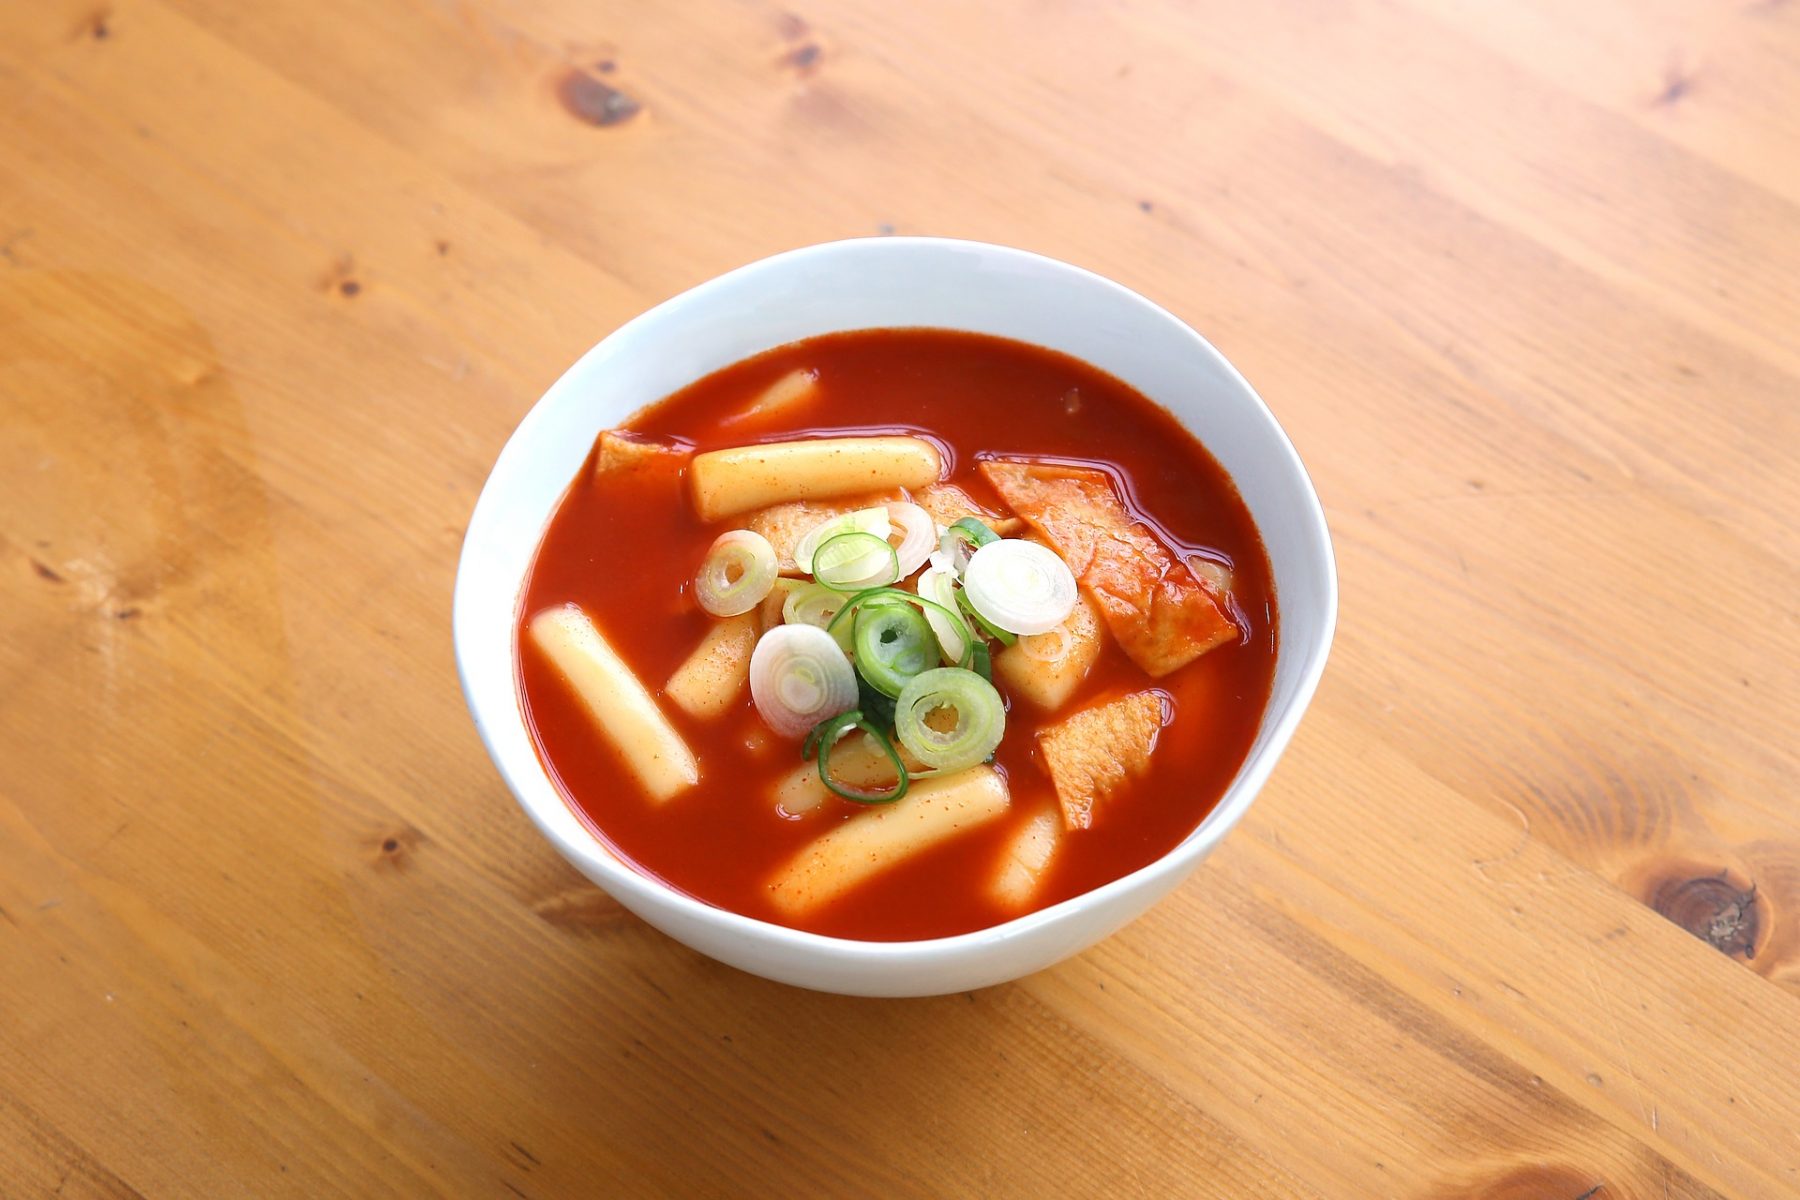 Image of dukbokki for an article on Korean food